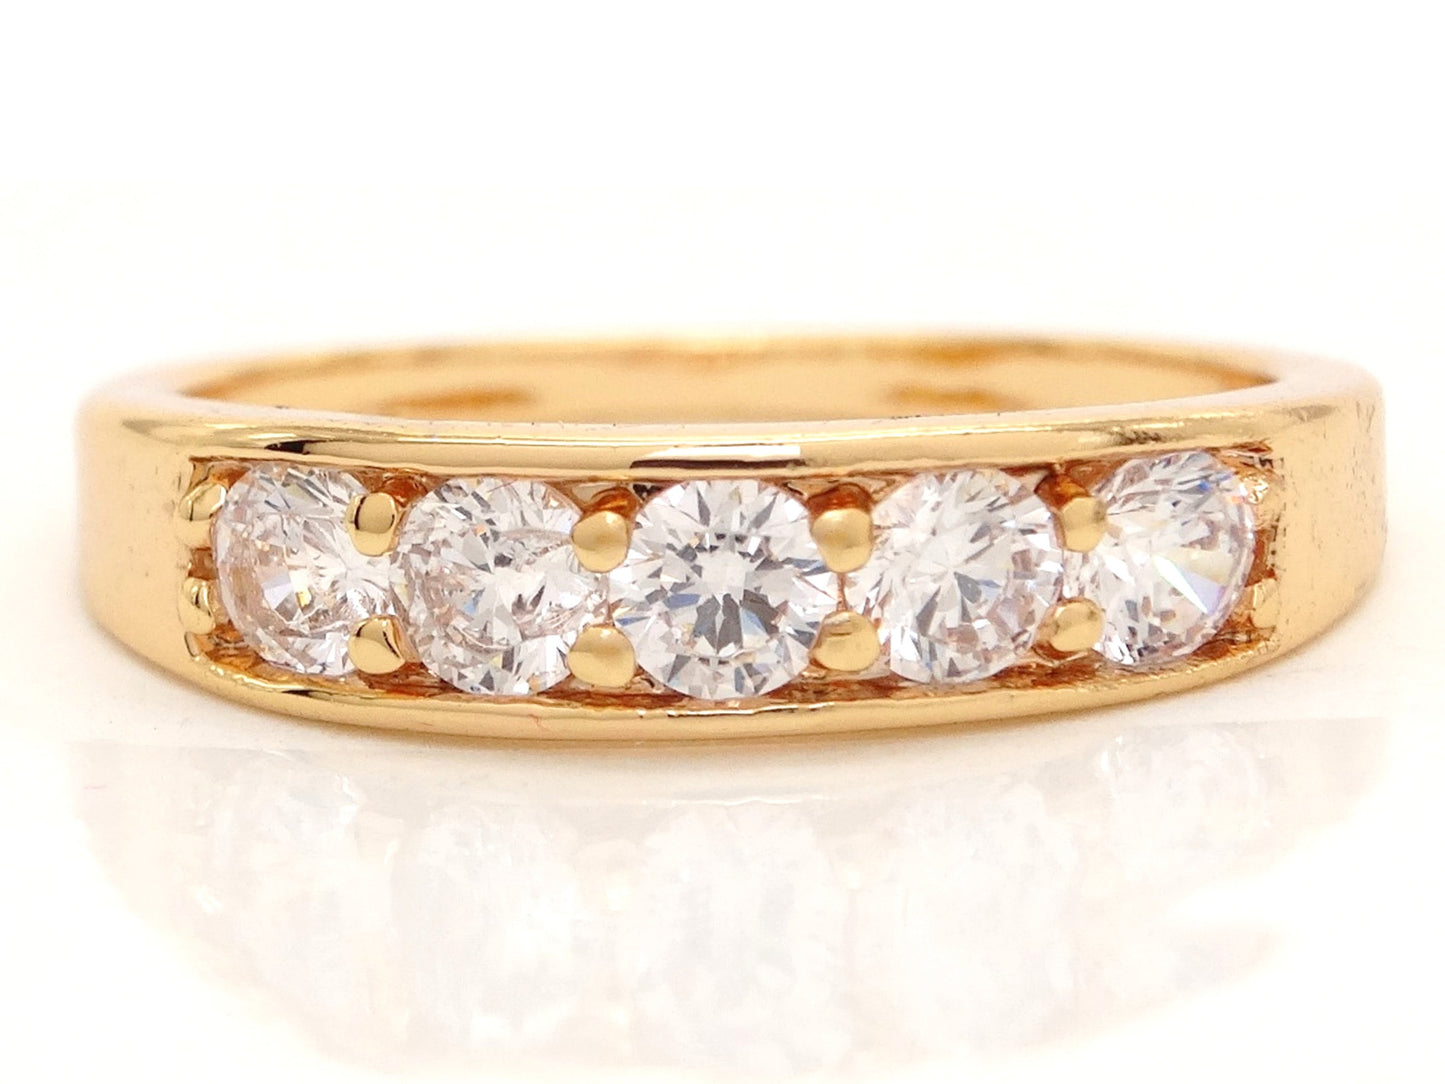 Thick gold gemstone ring